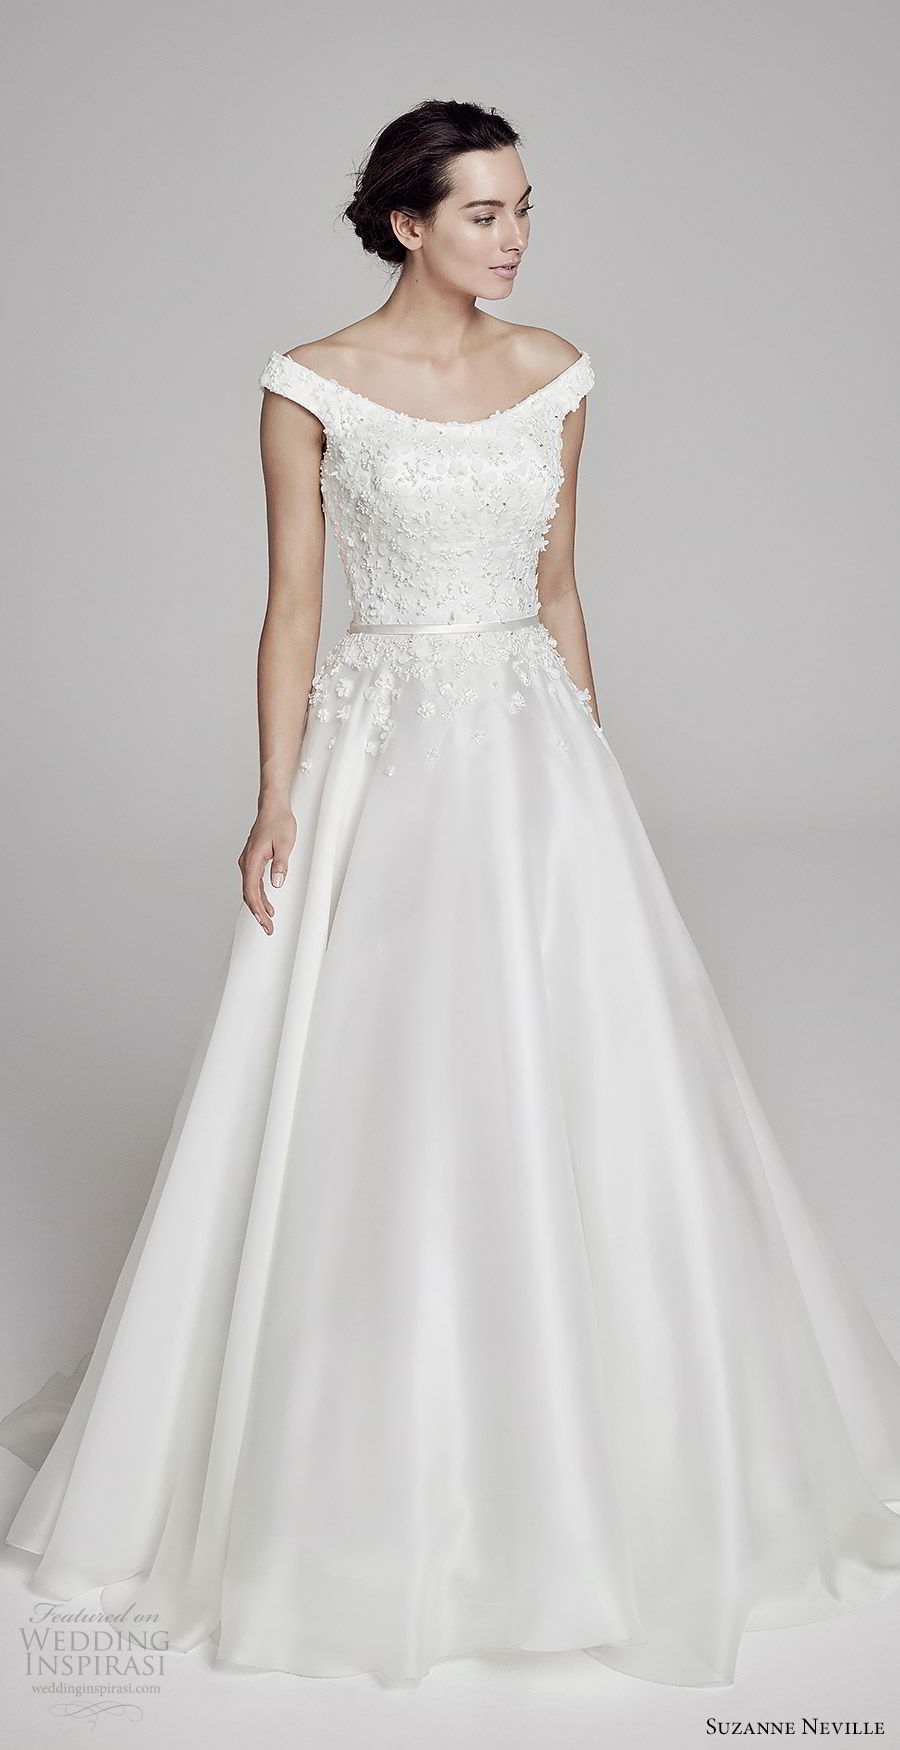 suzanne neville bridal 2019 off shoulder scoop neck embellished bodice a line ball gown wedding dress (floriana) romantic elegant mv